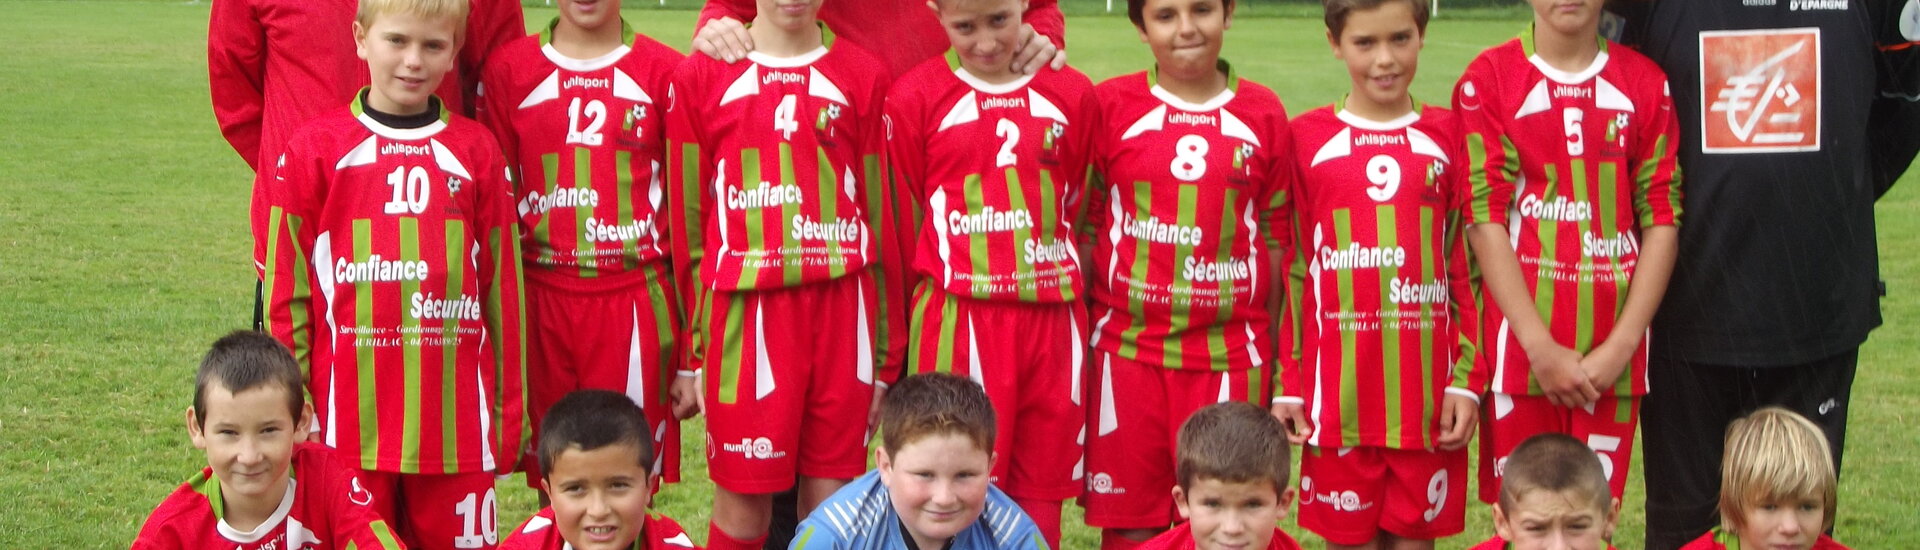 Équipe Football Club Cère FC Cantal Enfants 12 ans